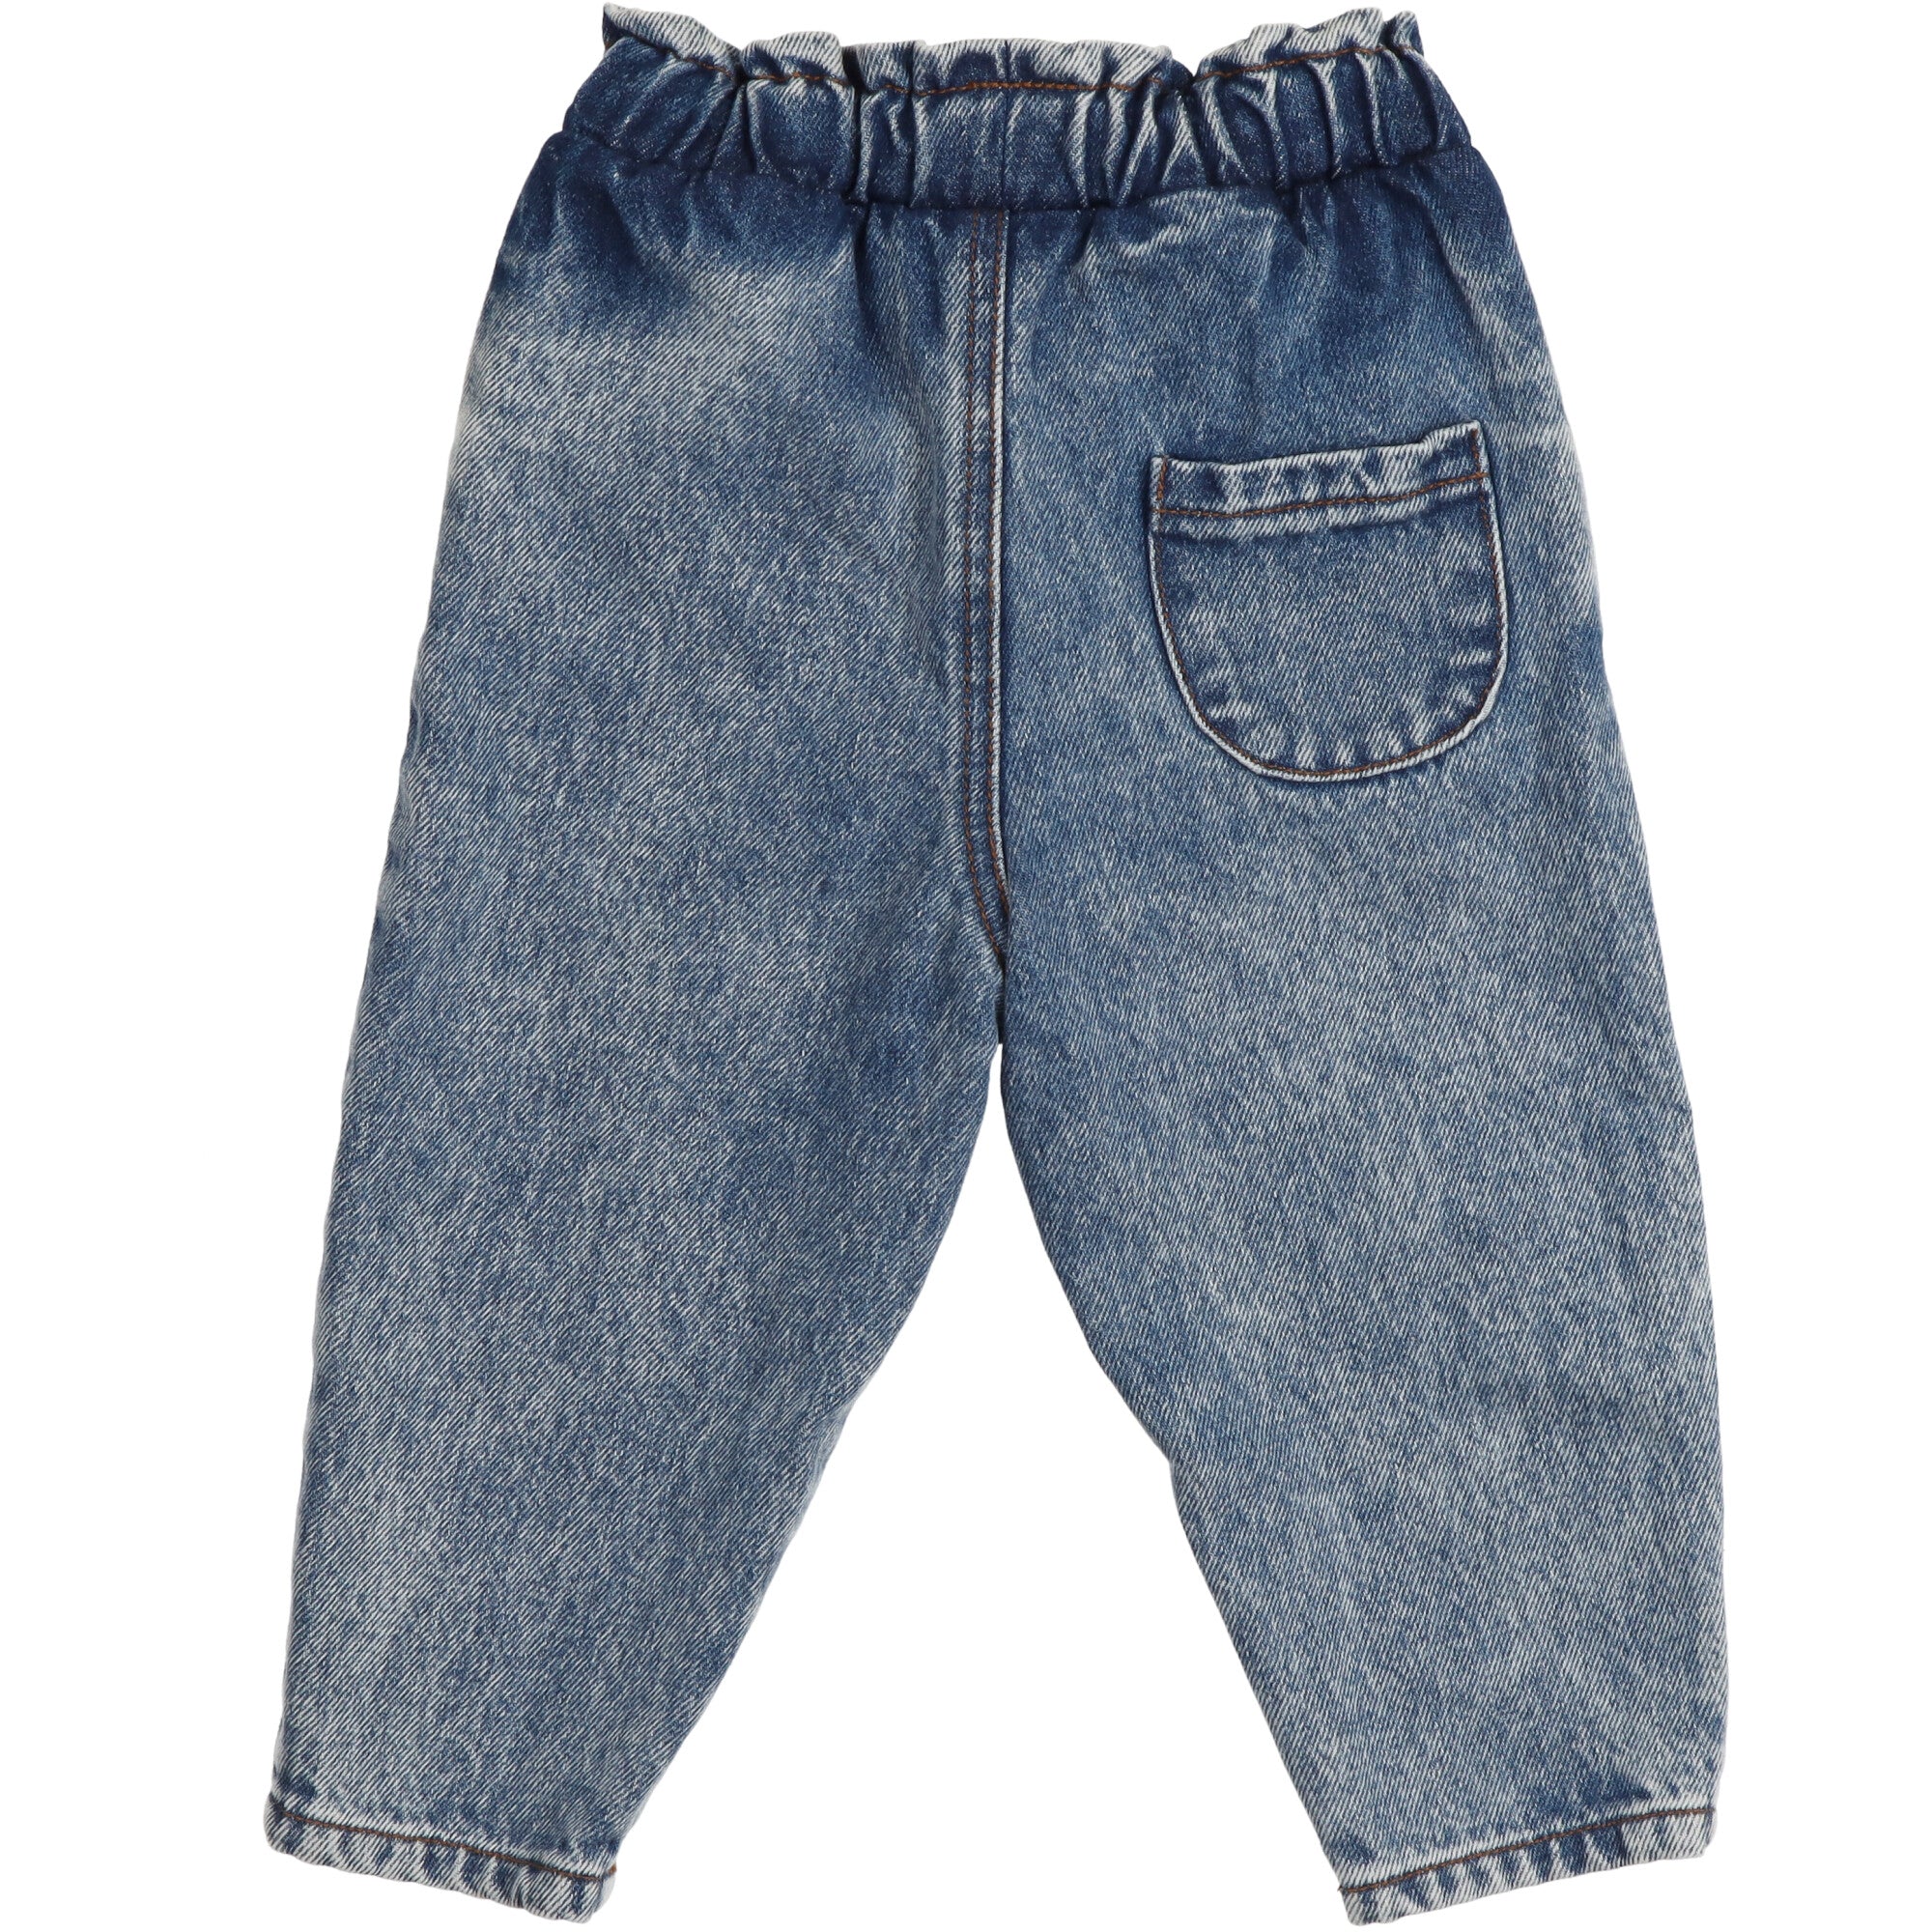 pantaloni-per-bambina-in-jeans-colore-blu